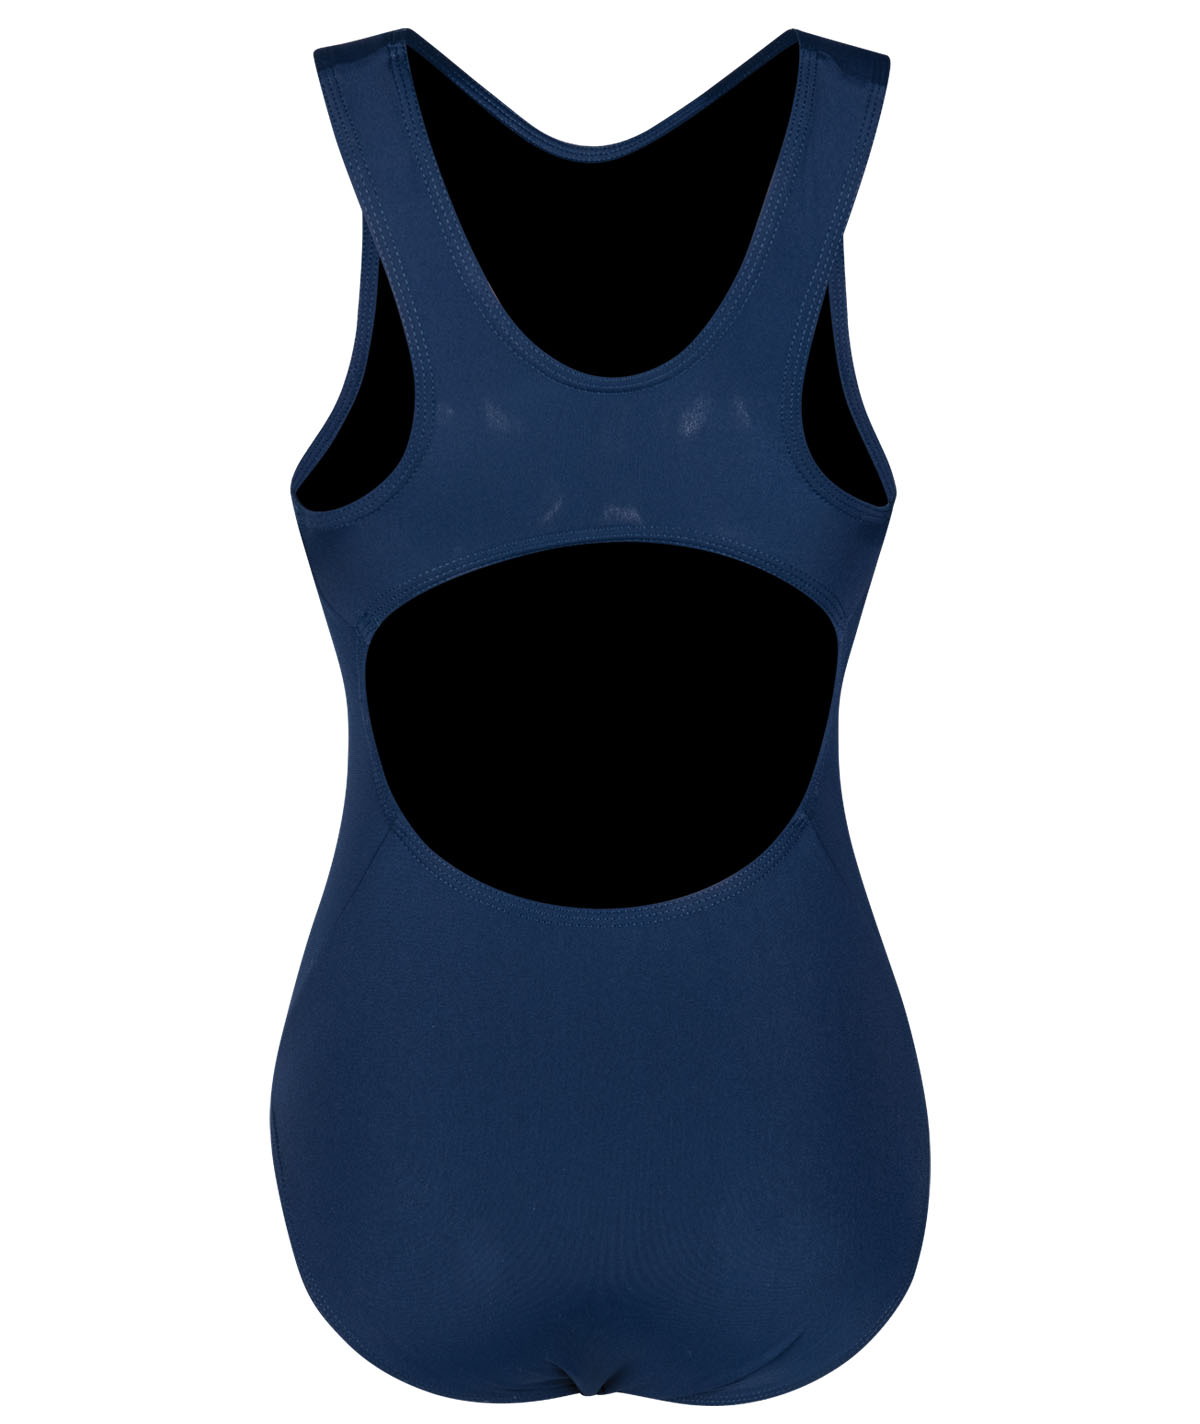 Women's Aquashape Moderate Lap Swimsuit